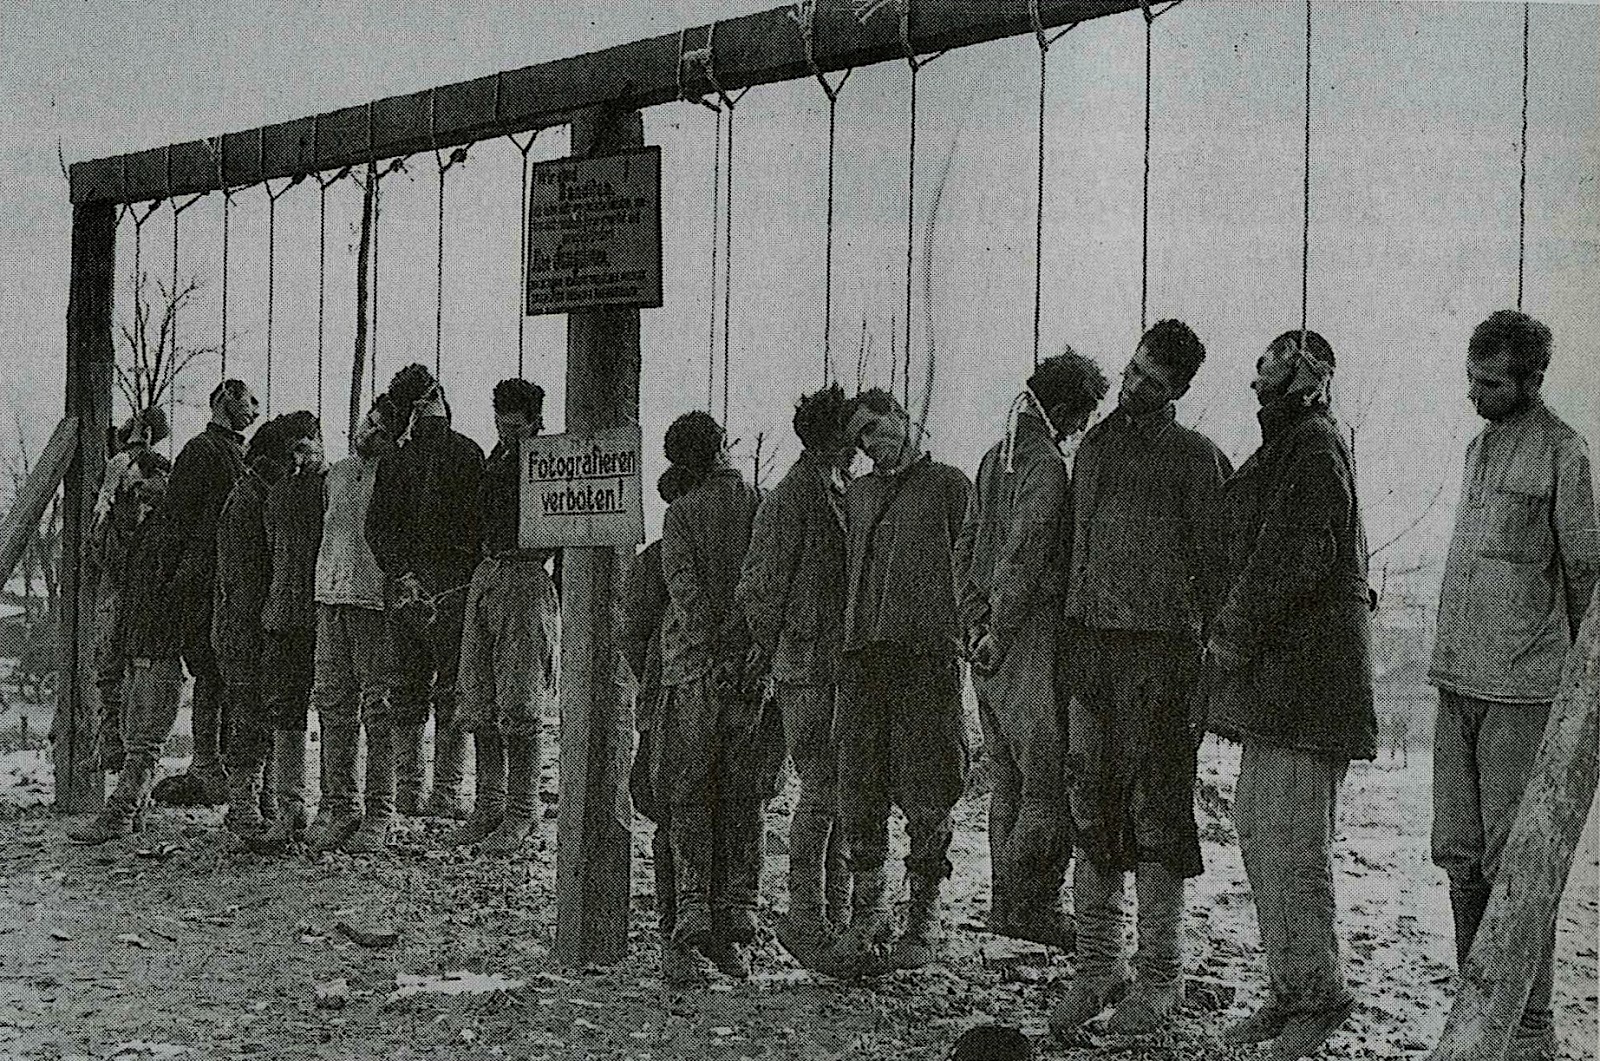 Japan No War Jnw 日本平和の市民連盟 ナチス ドイツ軍の親衛隊は多数のロシア人らをパルチザンとして見せしめの絞首刑を執行した